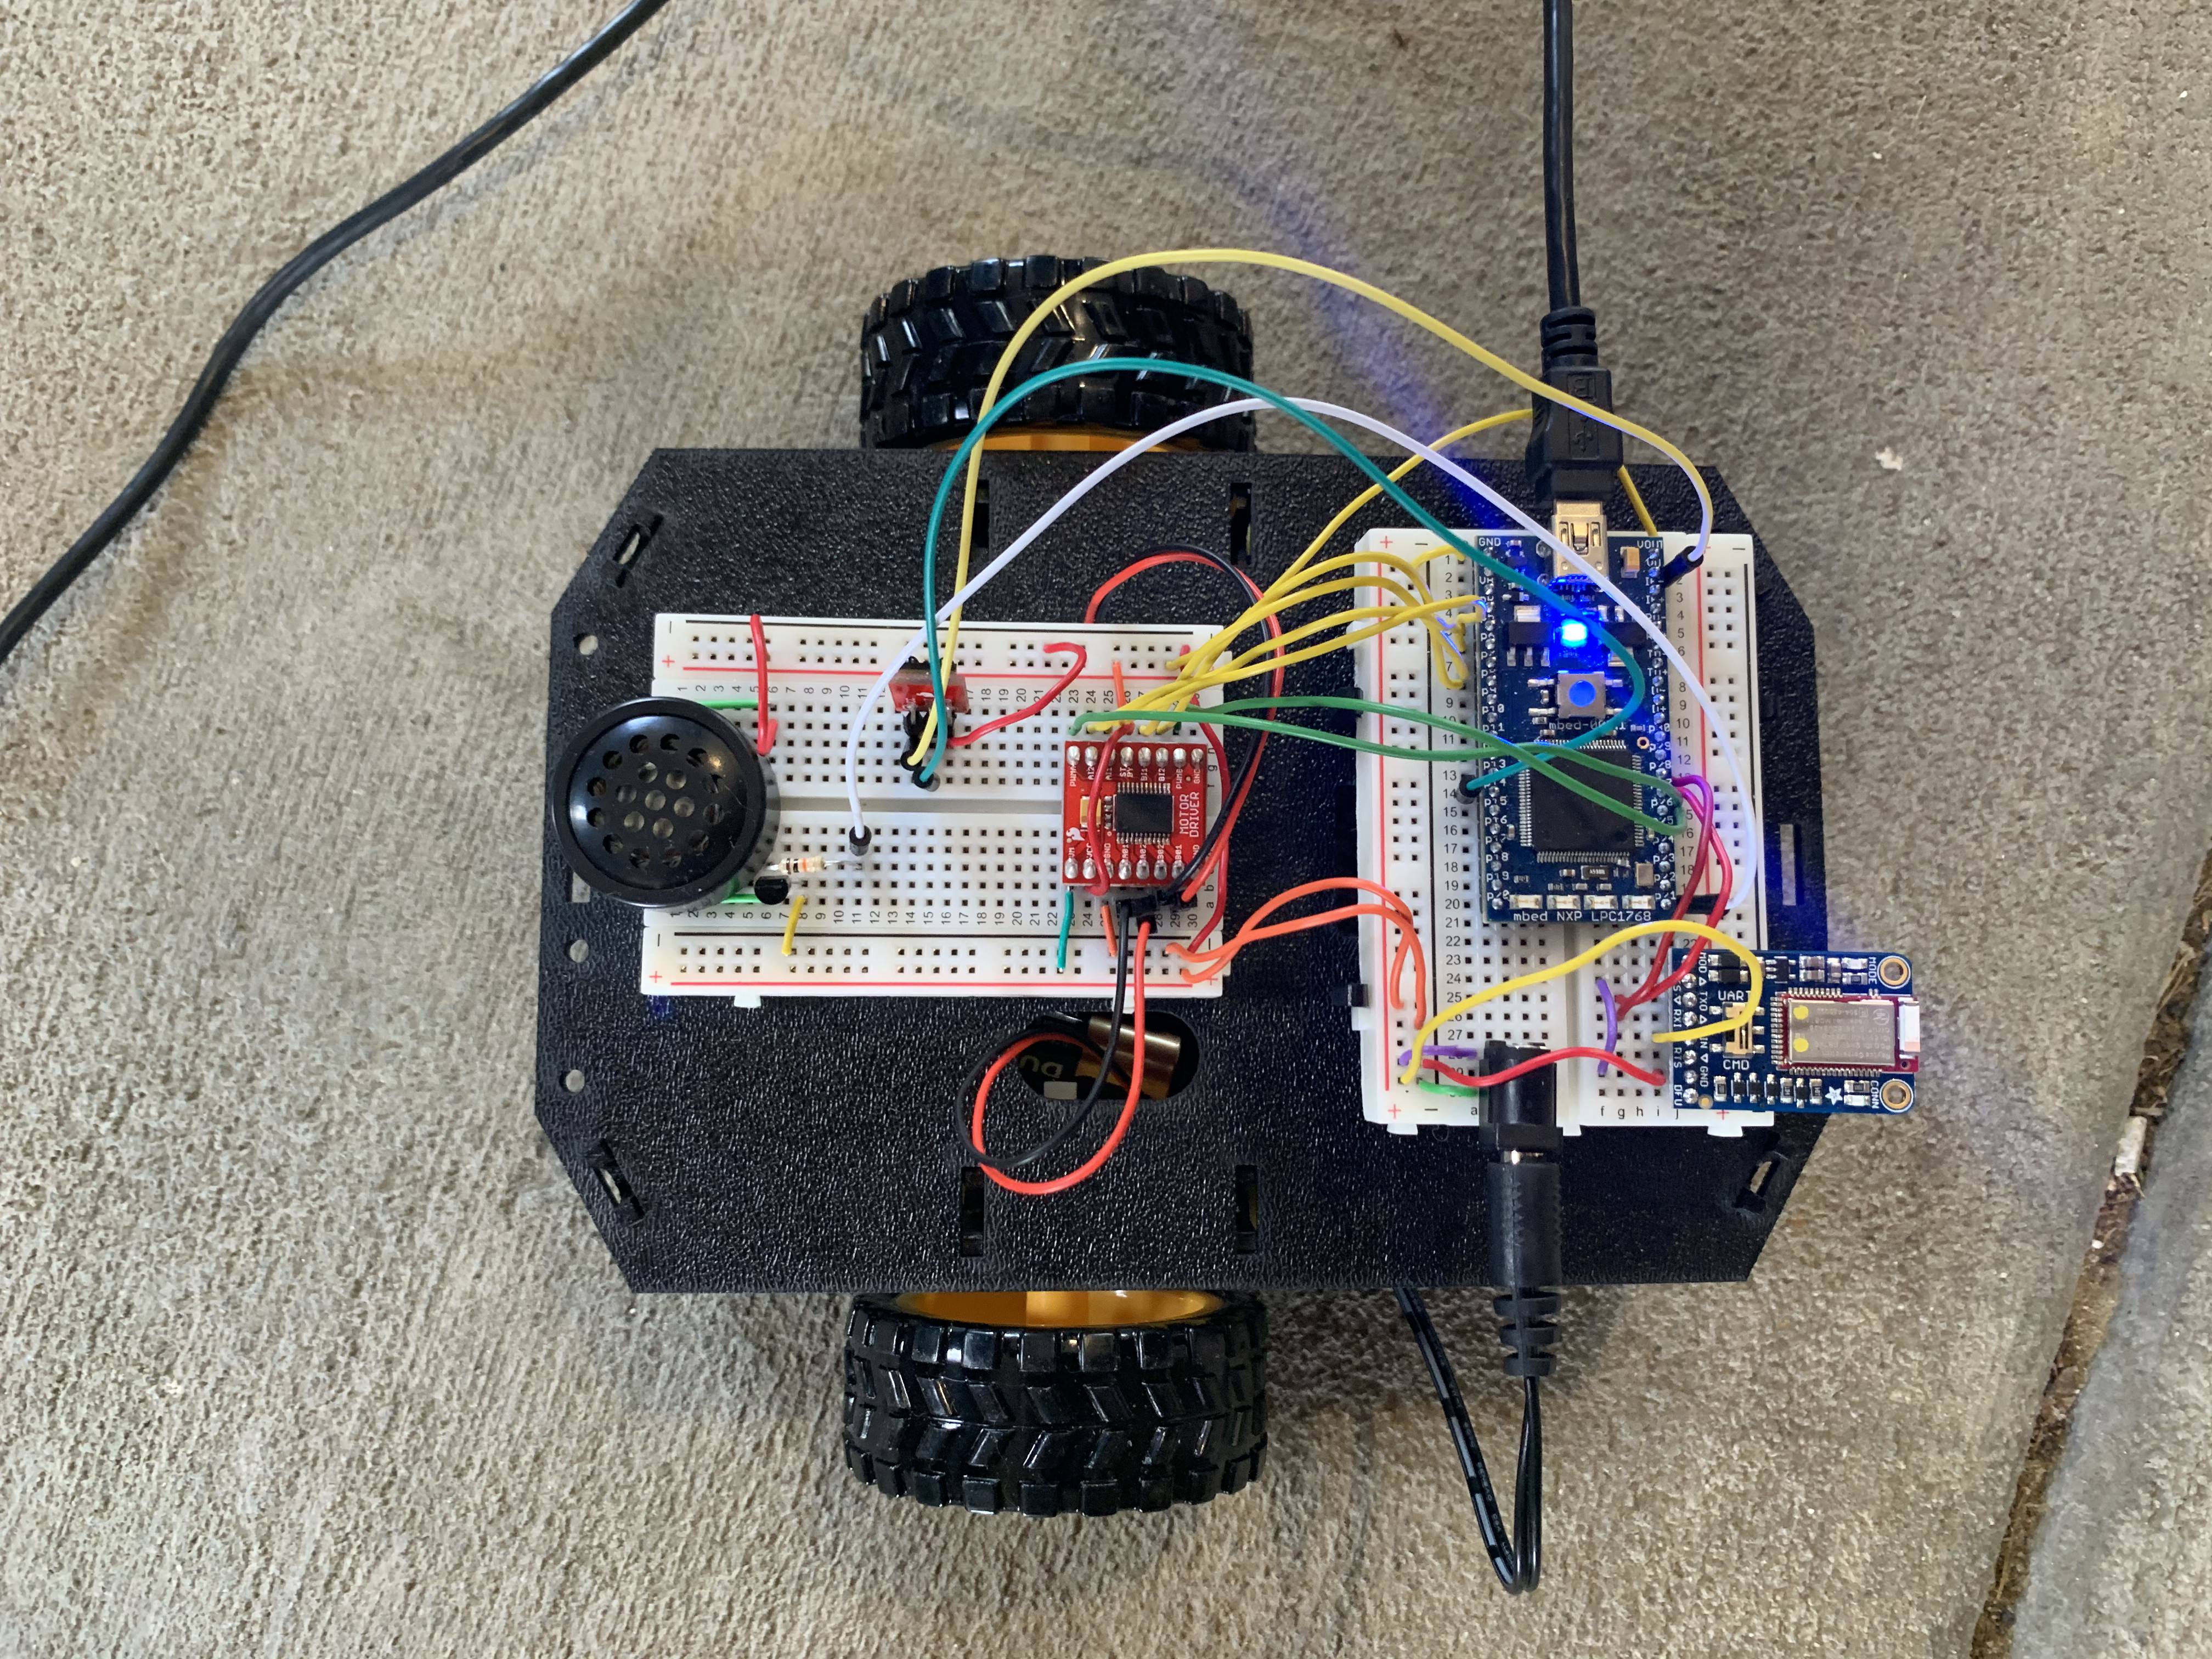 https://os.mbed.com/media/uploads/johnnykang0905/final_assembled_robot.jpg